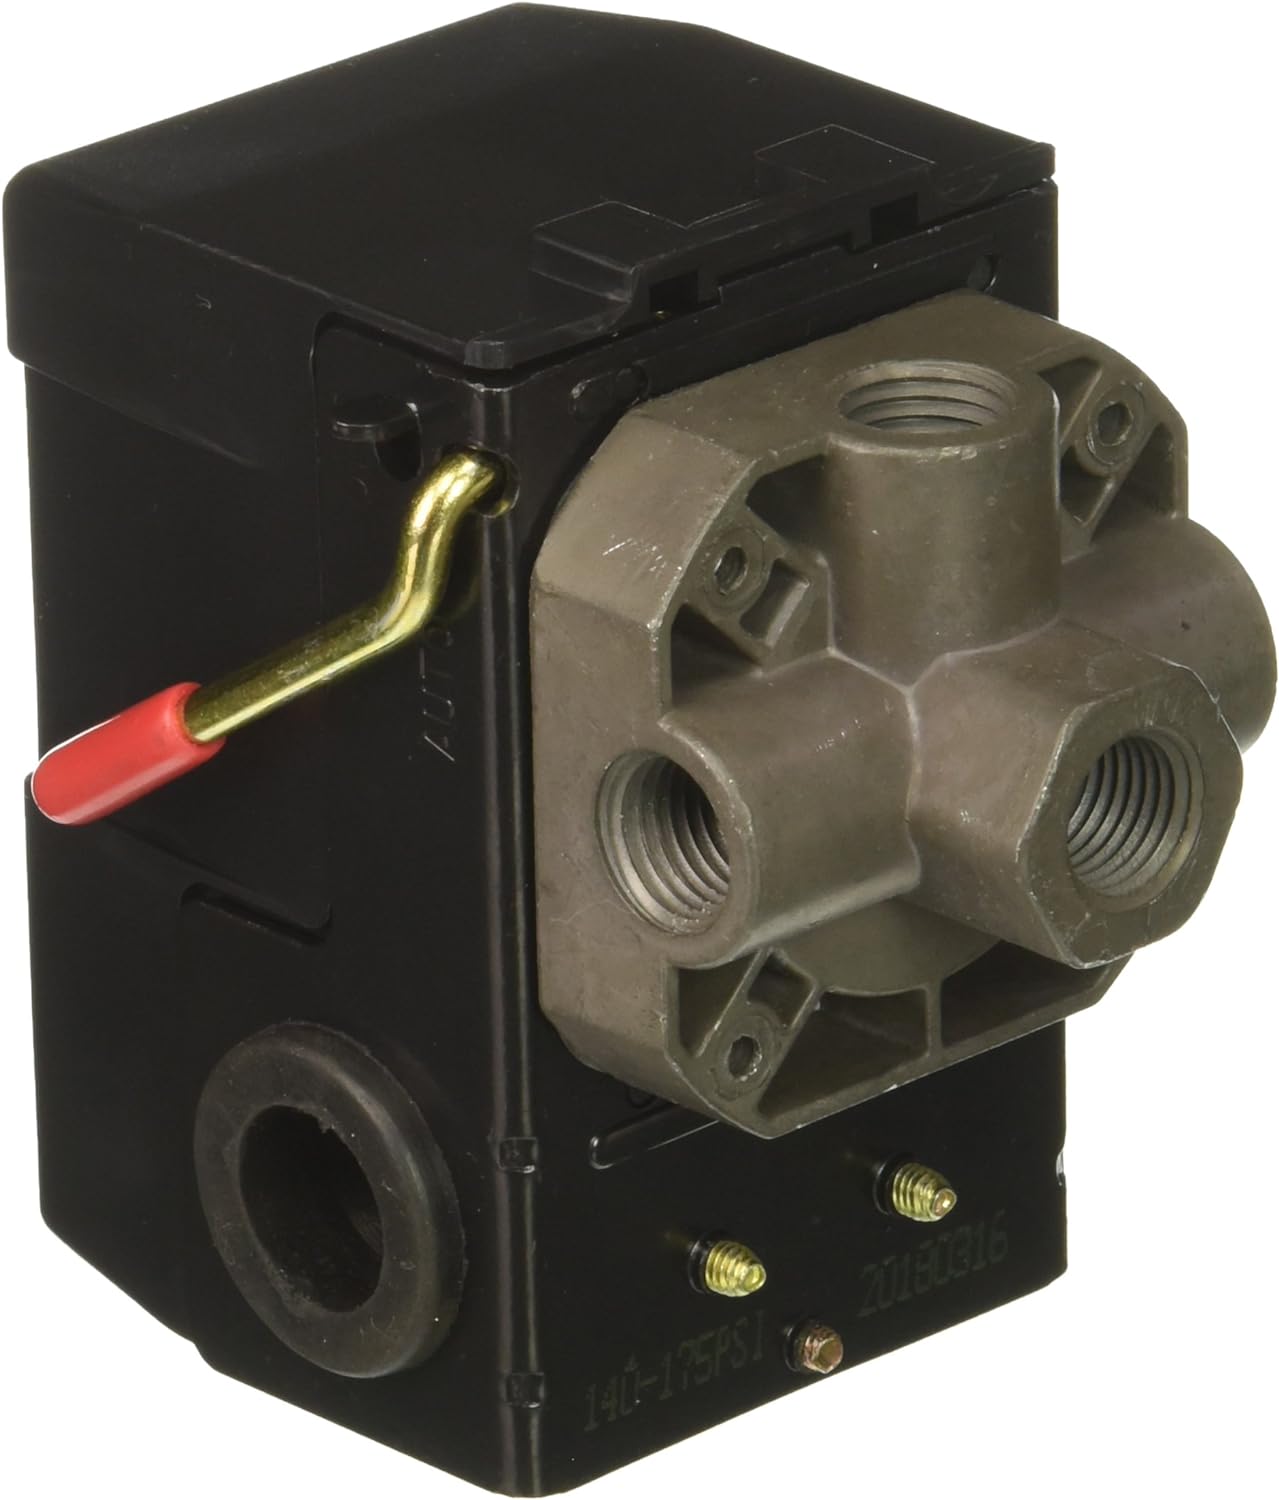 Lefoo Air Compressor Switch Pressure Control Switch Valve for Air Compressor Replaces Furnas Square D H4 - Lf10-4h-1-npt1/4-140